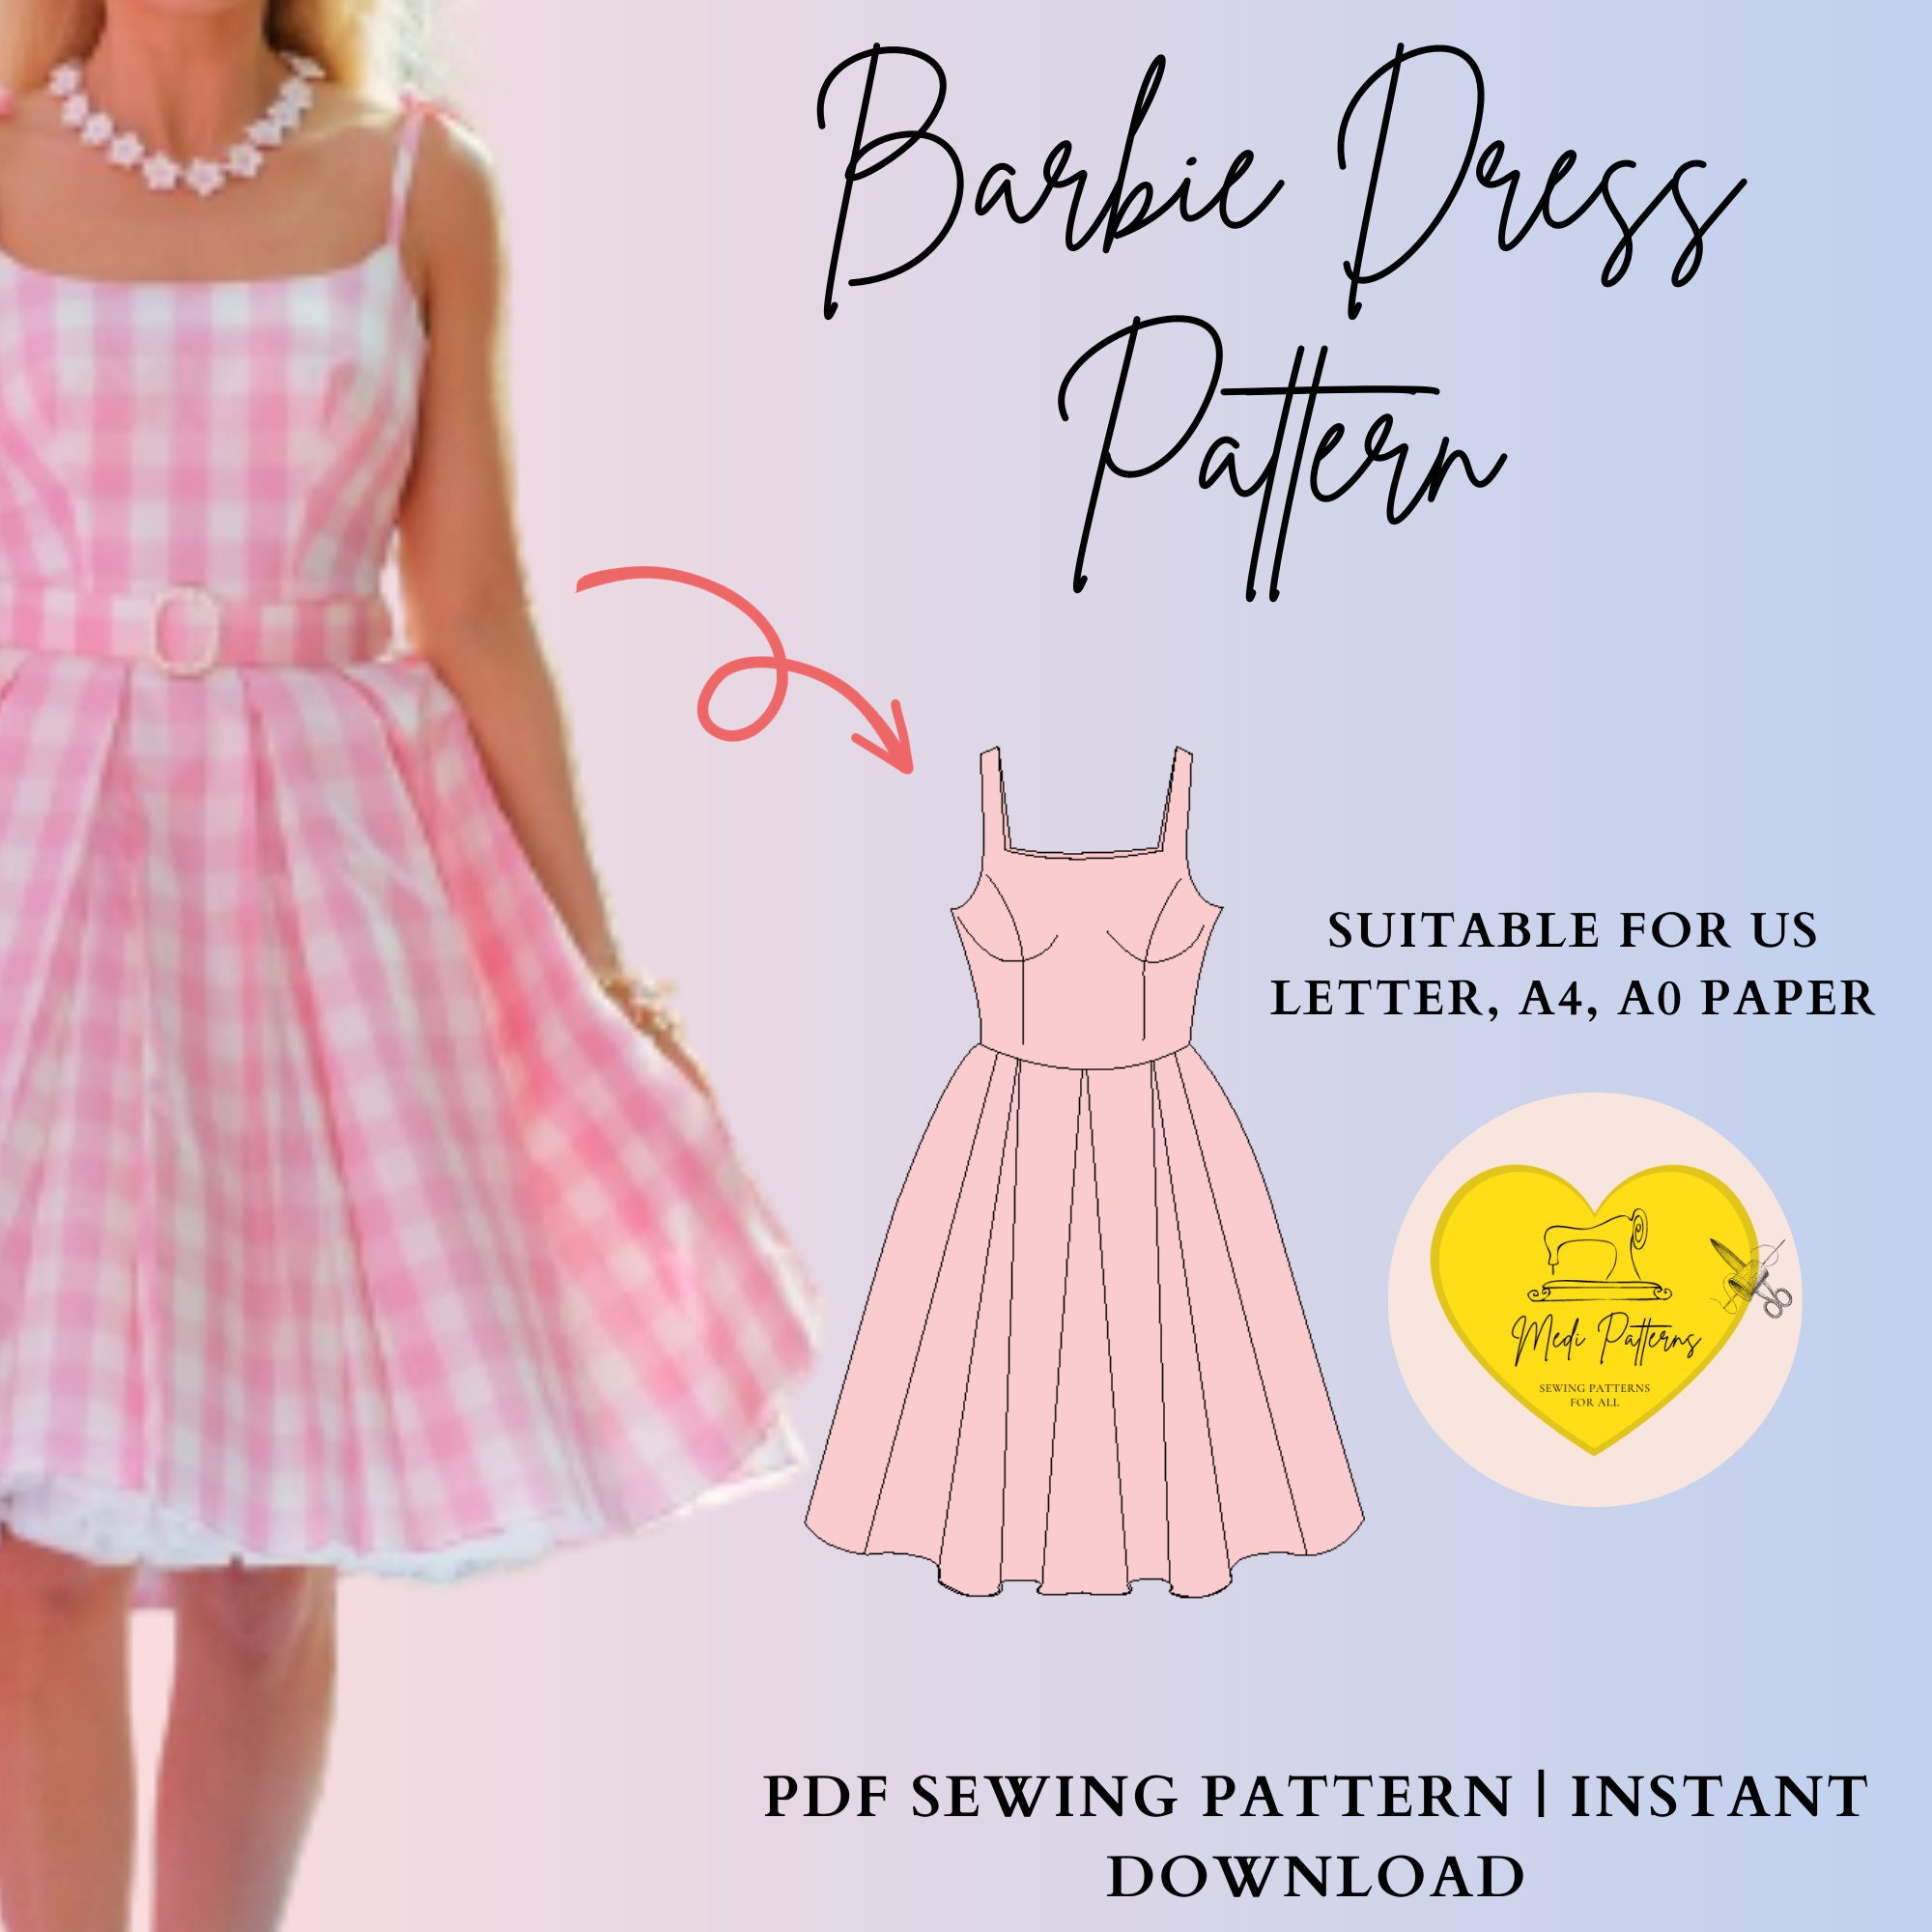 Barbie dress pattern